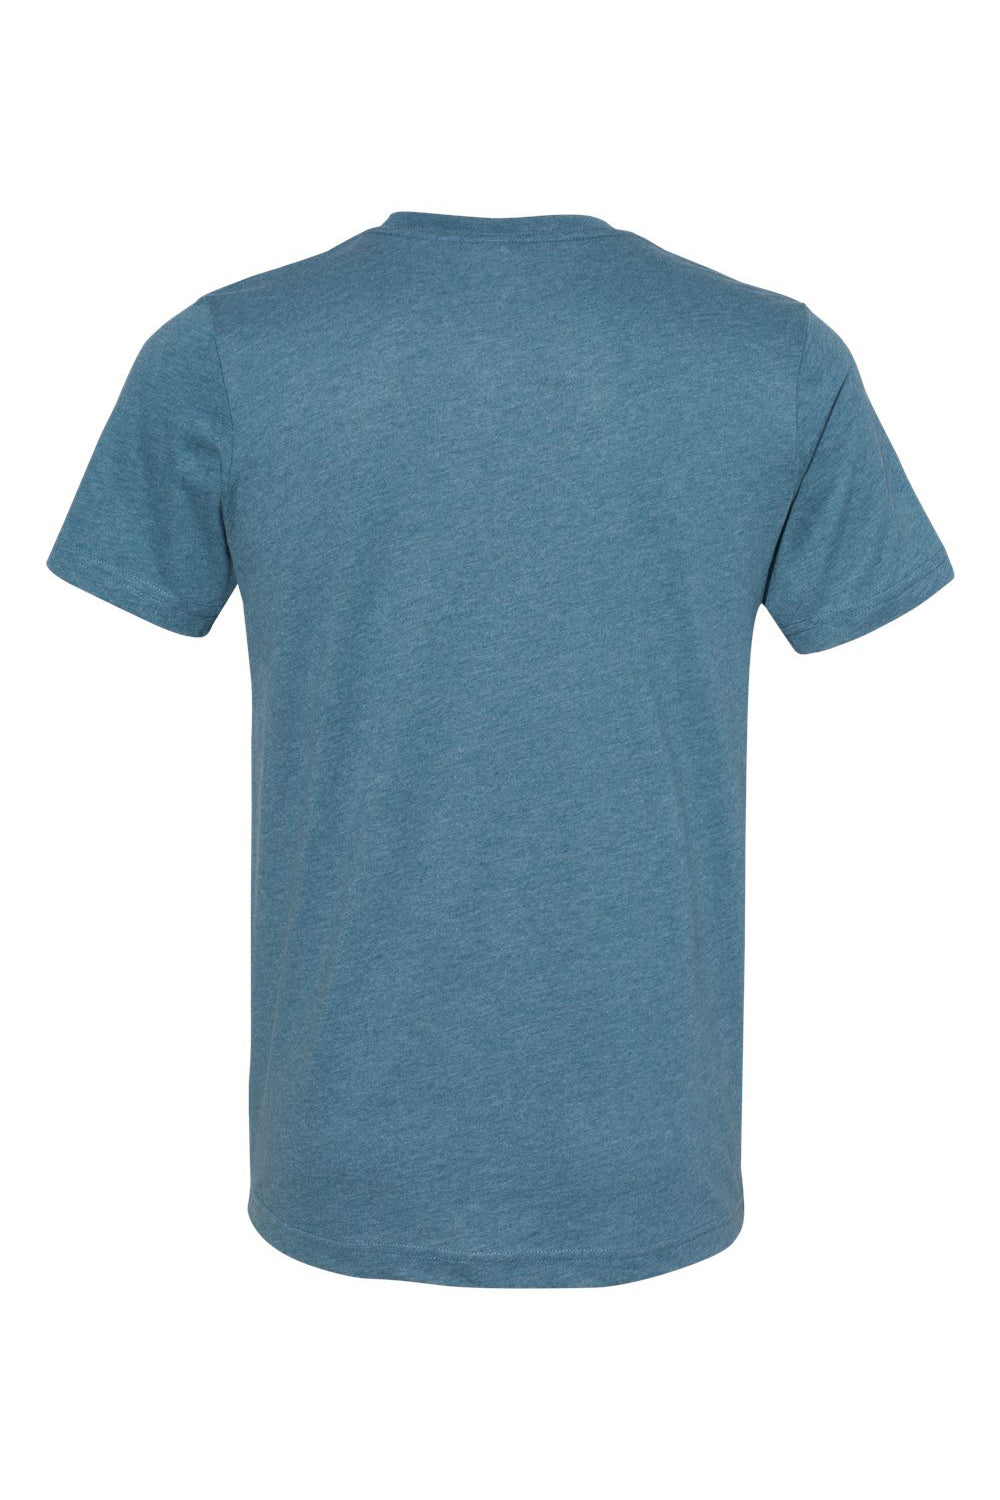 Bella + Canvas BC3301/3301C/3301 Mens Jersey Short Sleeve Crewneck T-Shirt Heather Deep Teal Blue Flat Back